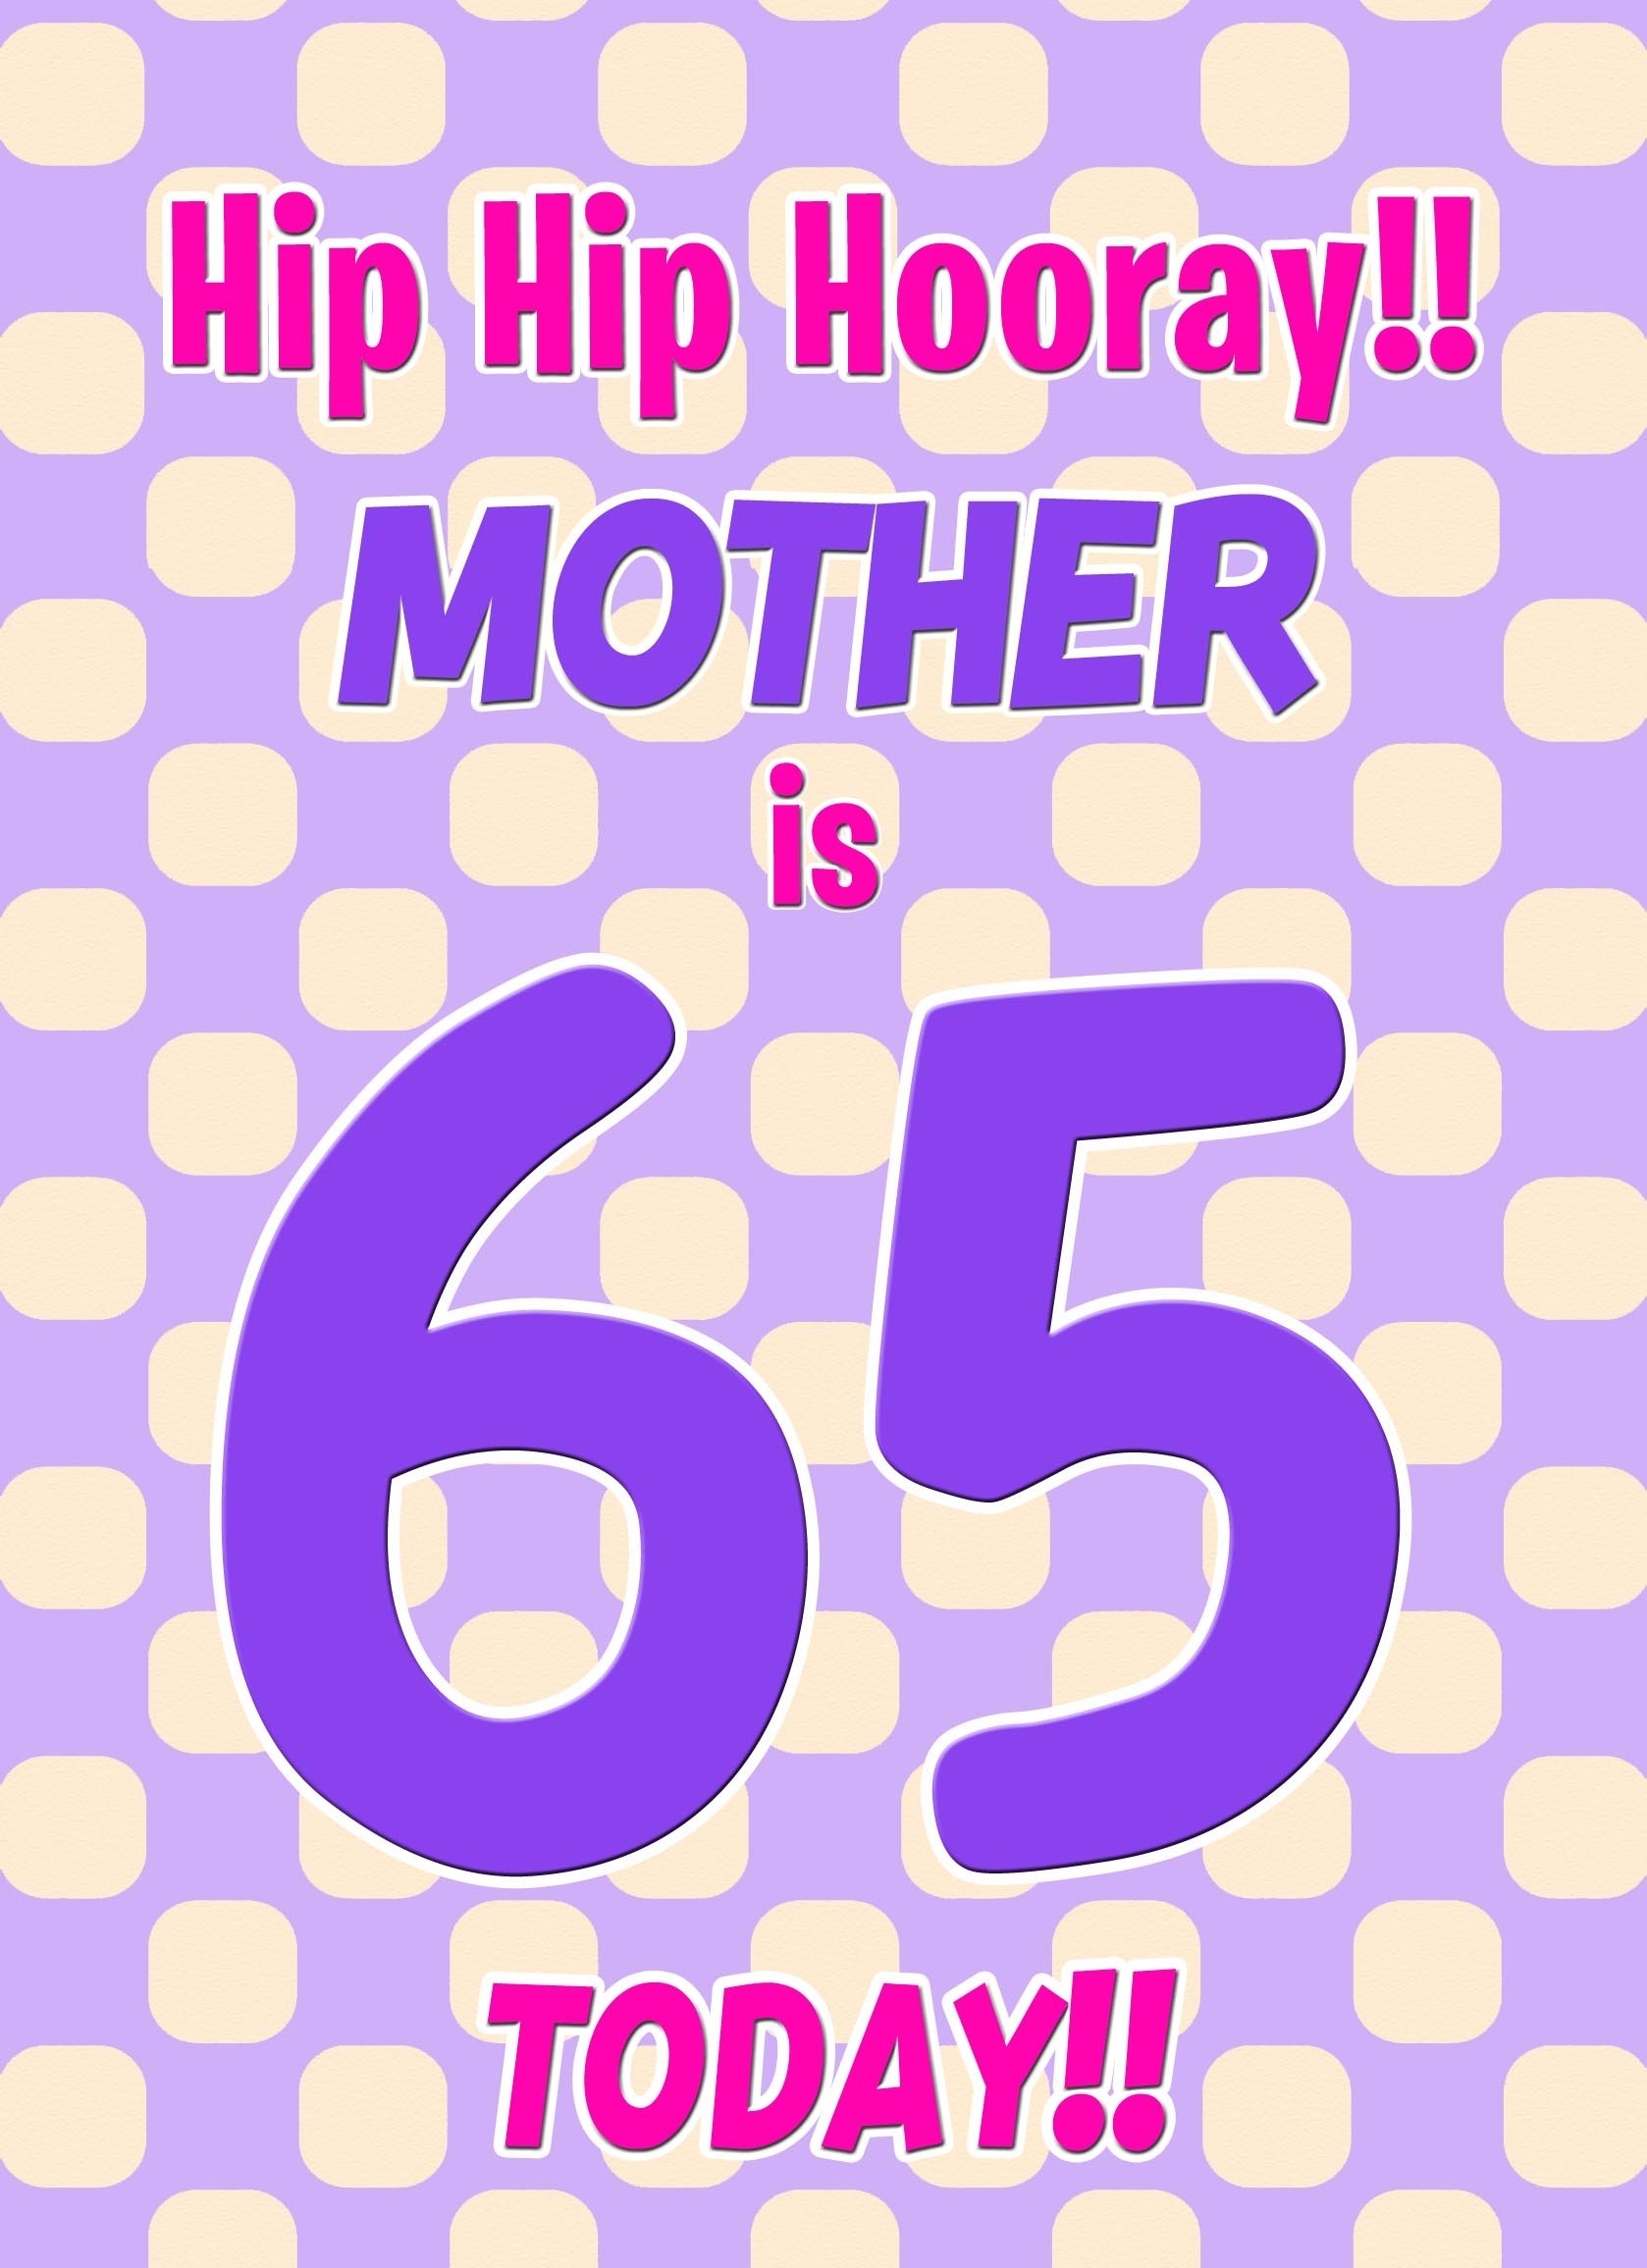 Mother 65th Birthday Card (Purple Spots)